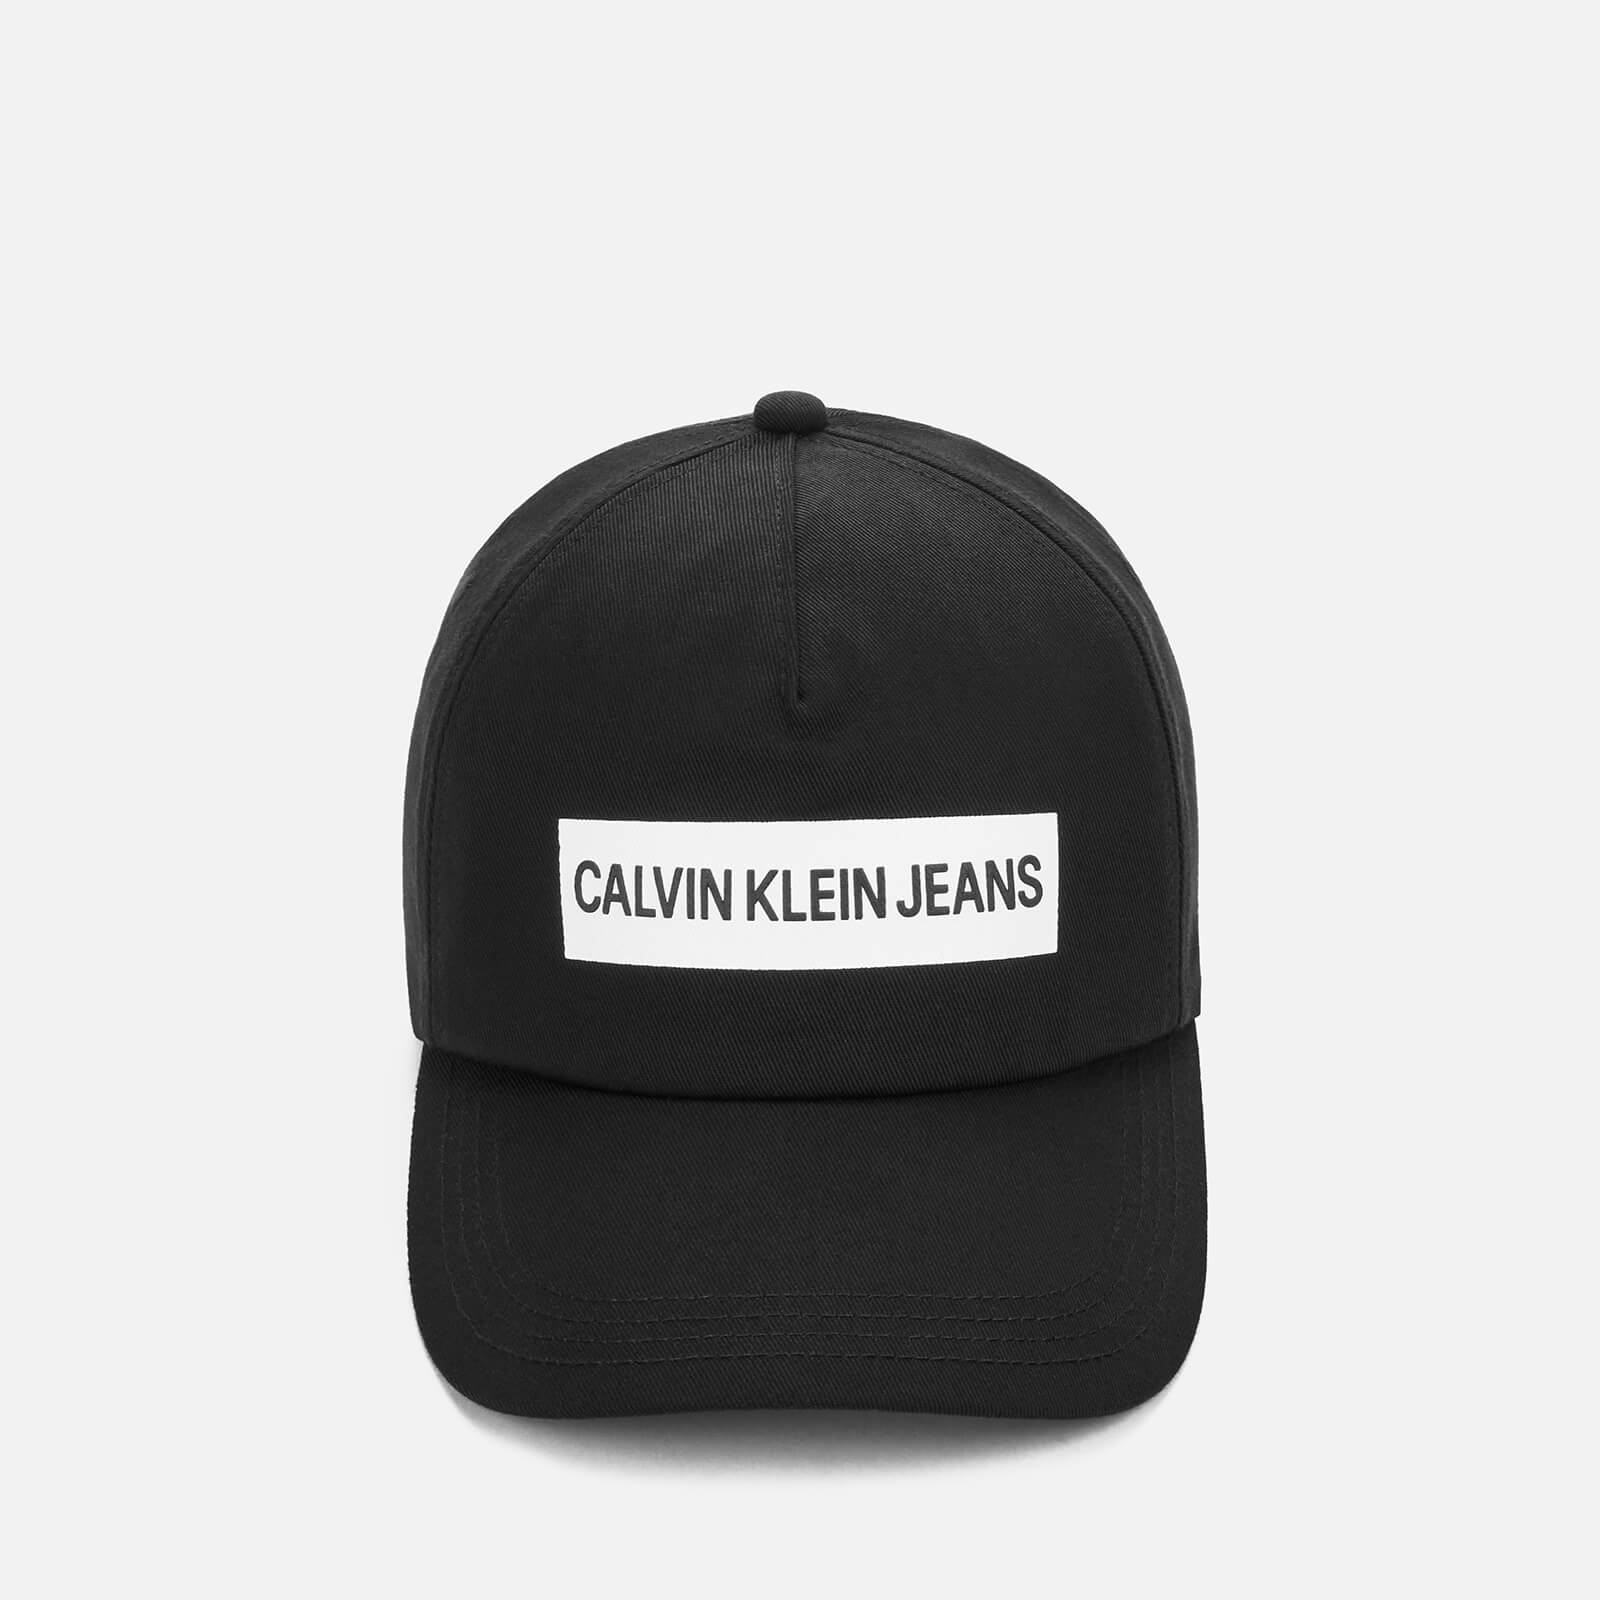 Calvin Klein Jeans Women's Cap Institutional - Black